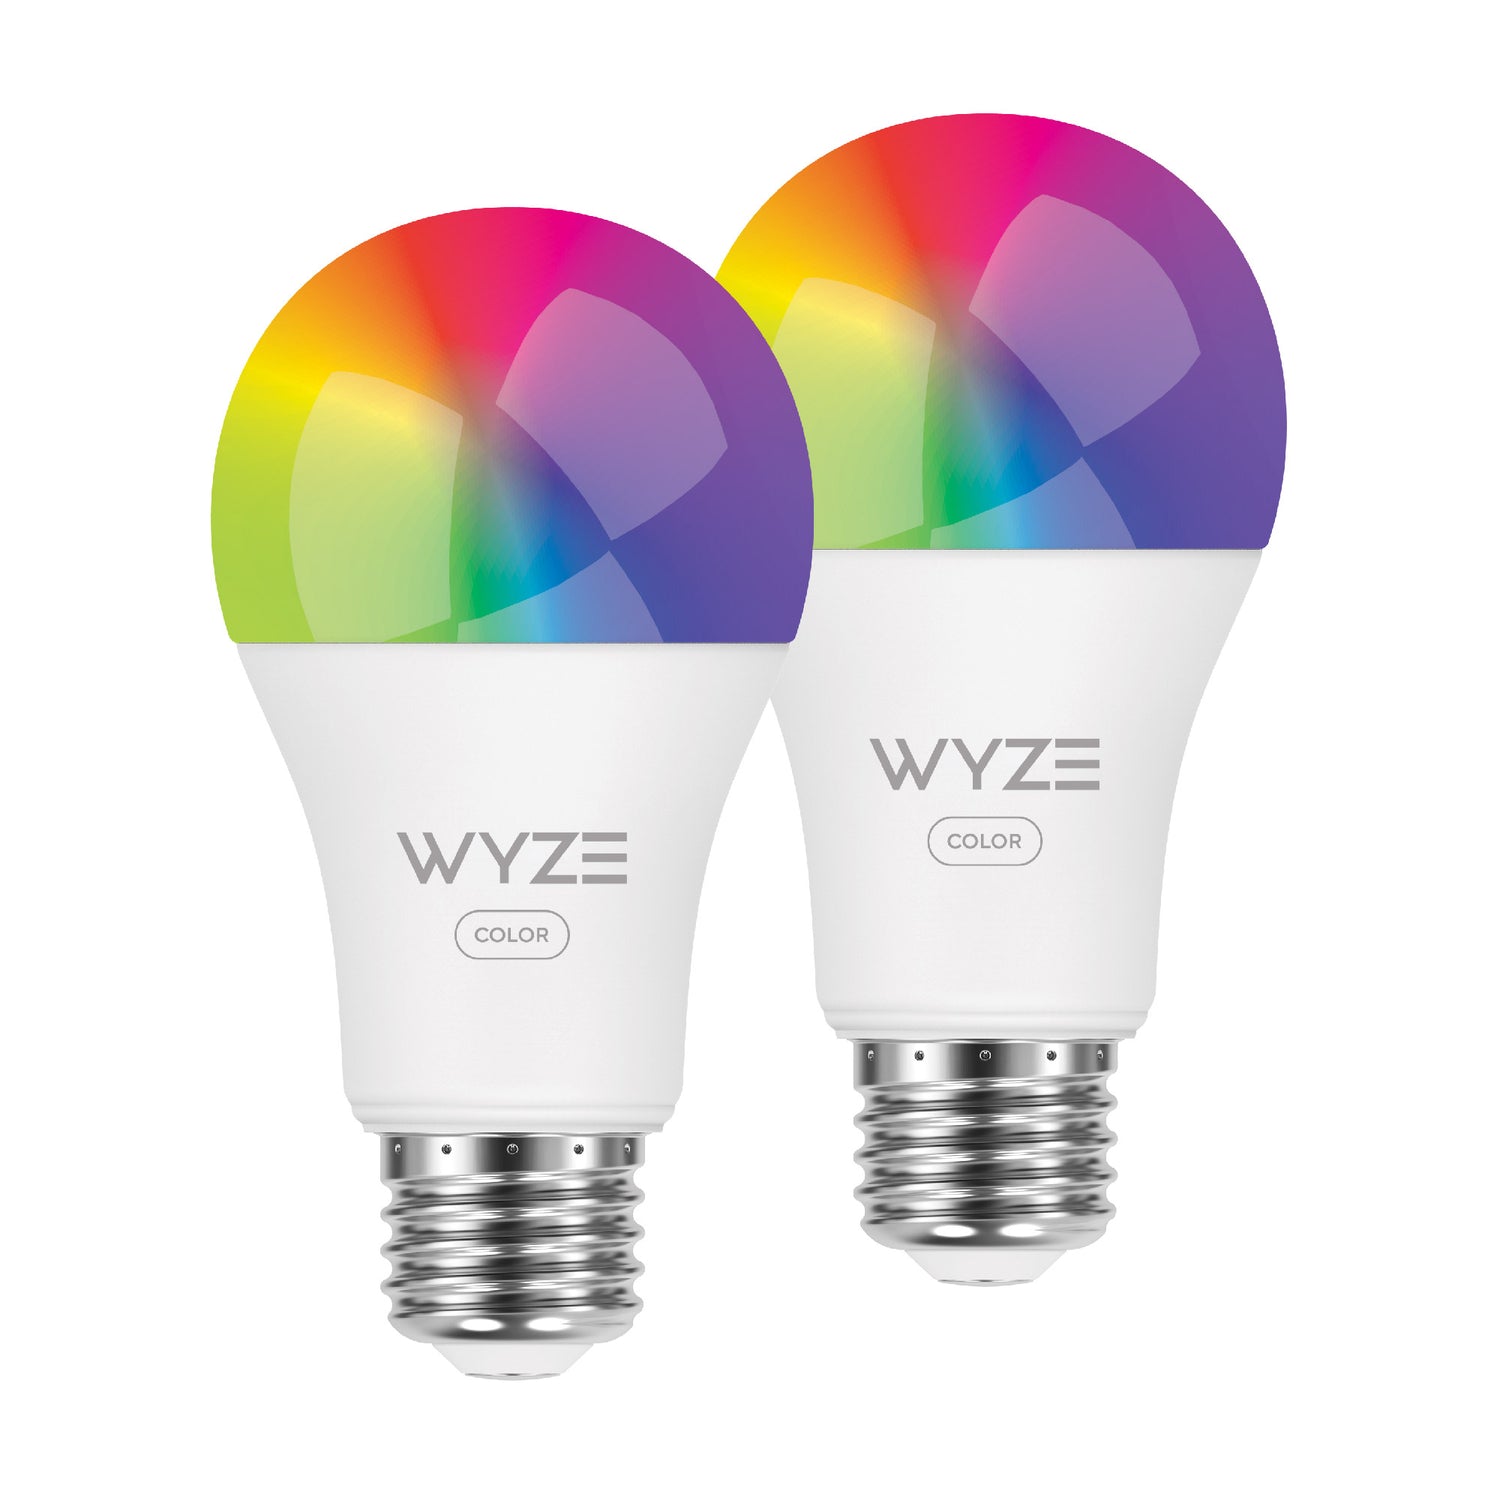 Best Color Wifi & Dimmable Smart Light Bulbs Wyze Bulb